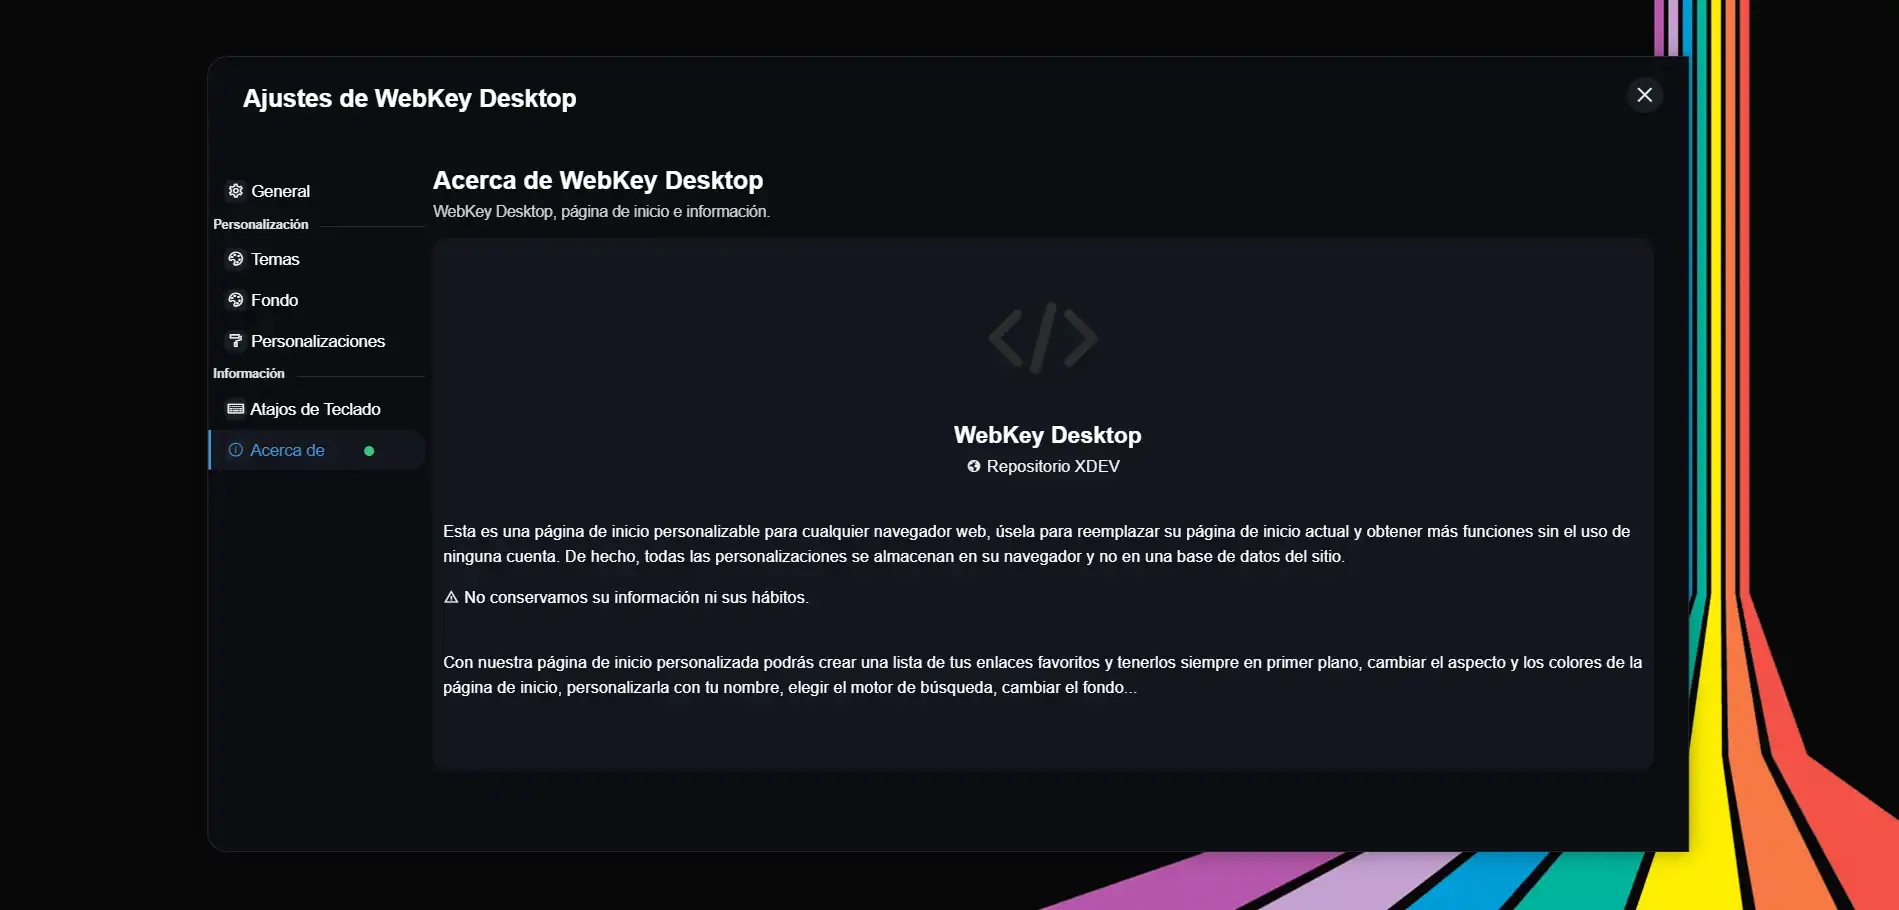 Download webtool of webapp WebKey Desktop